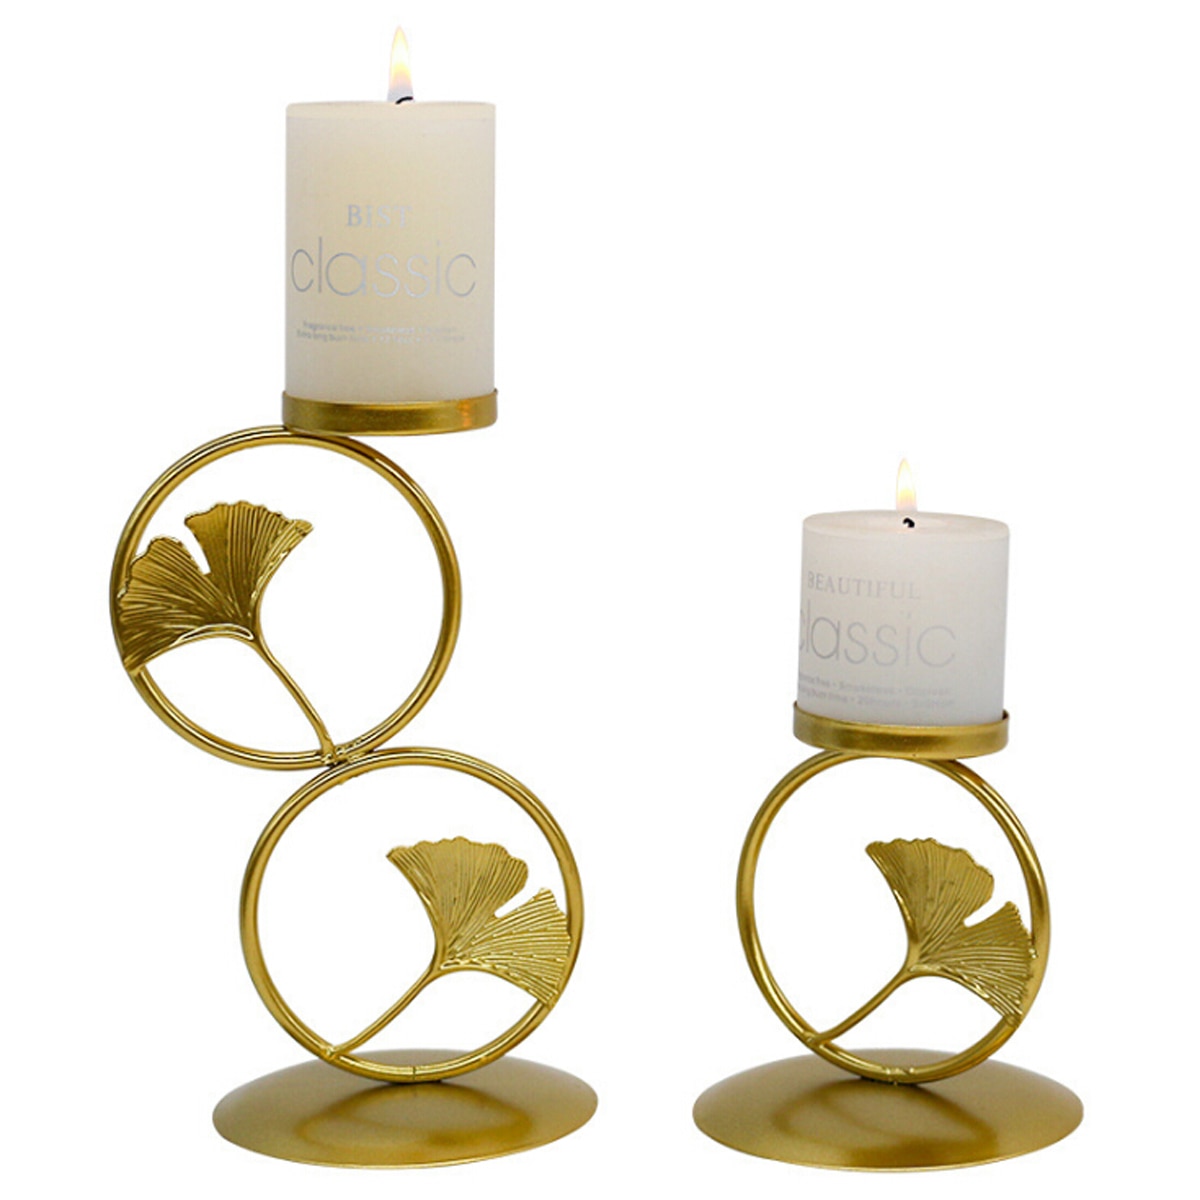 Retro guld lysestage dekorationer ginkgo blad rund ring lysredskaber romantiske bryllup rekvisitter